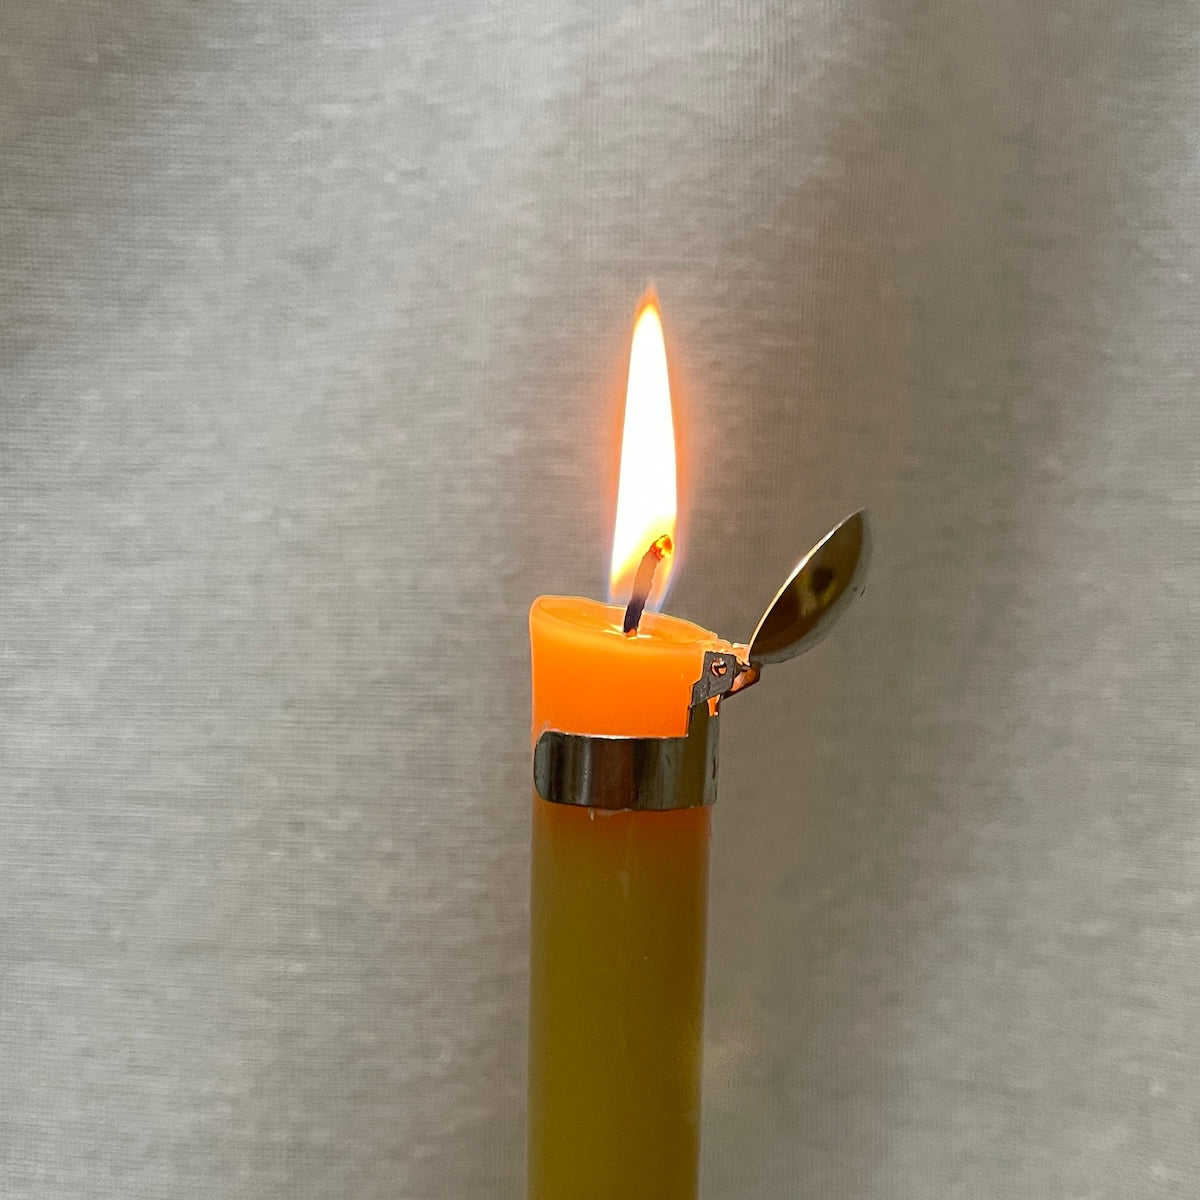 Candle automatic extinguisher